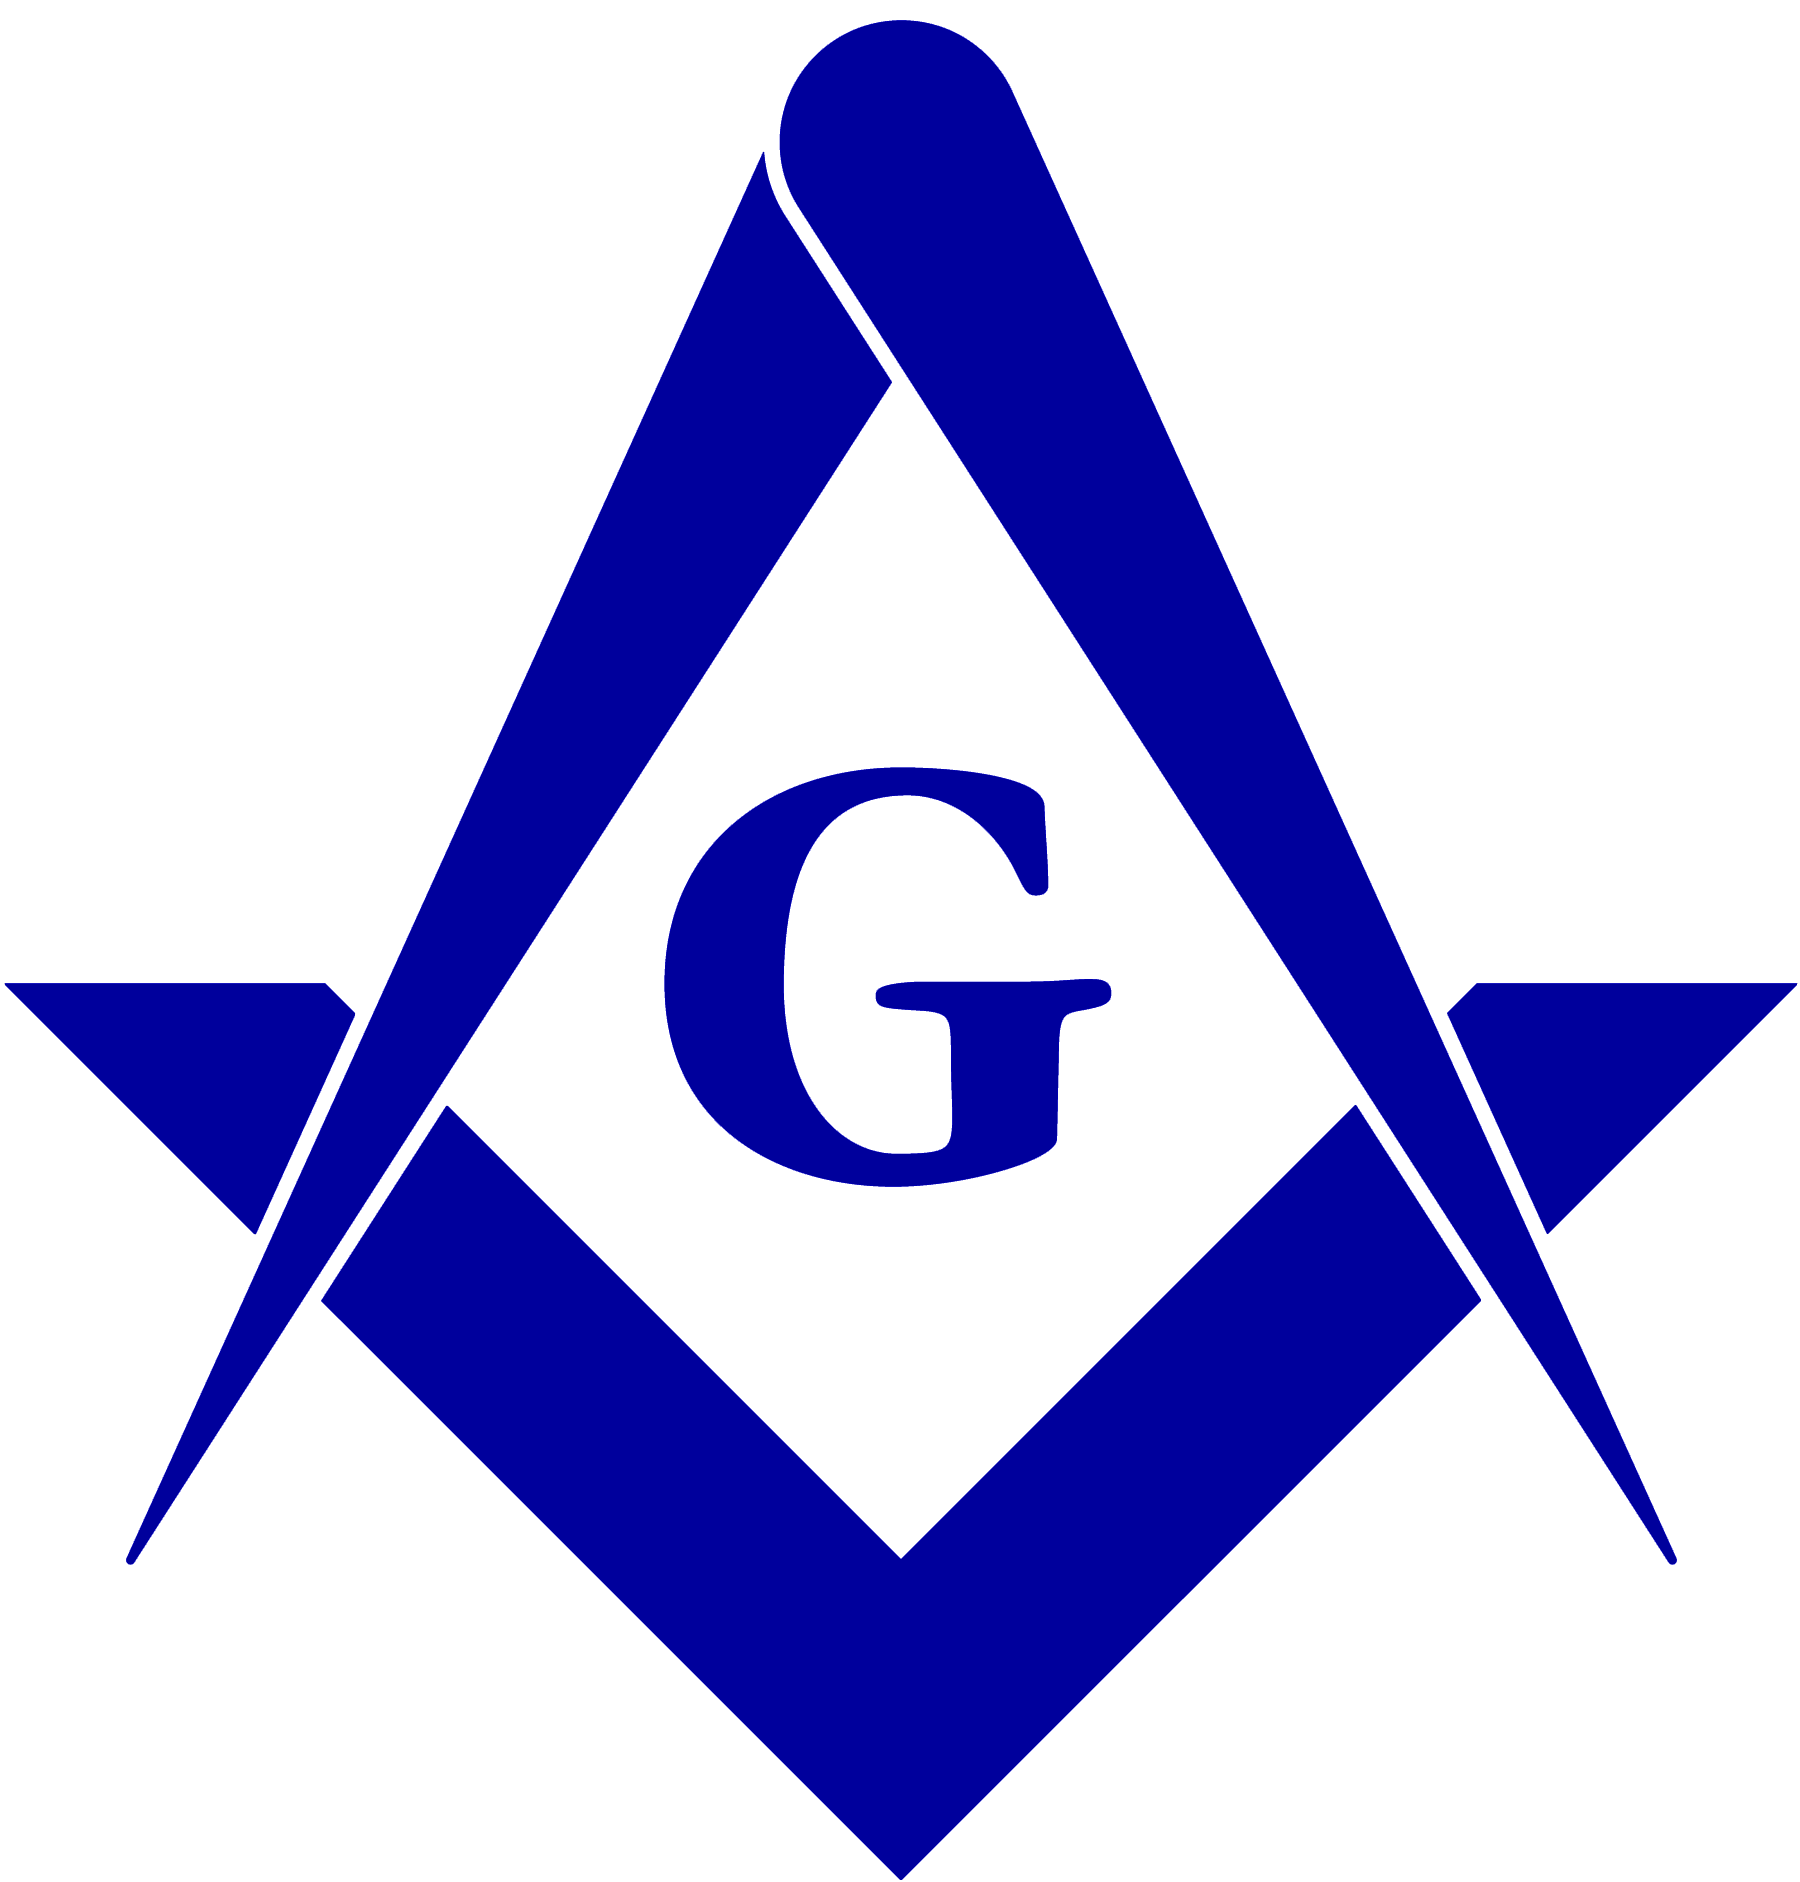 Masonic Symbols In Company Logos - IMAGESEE